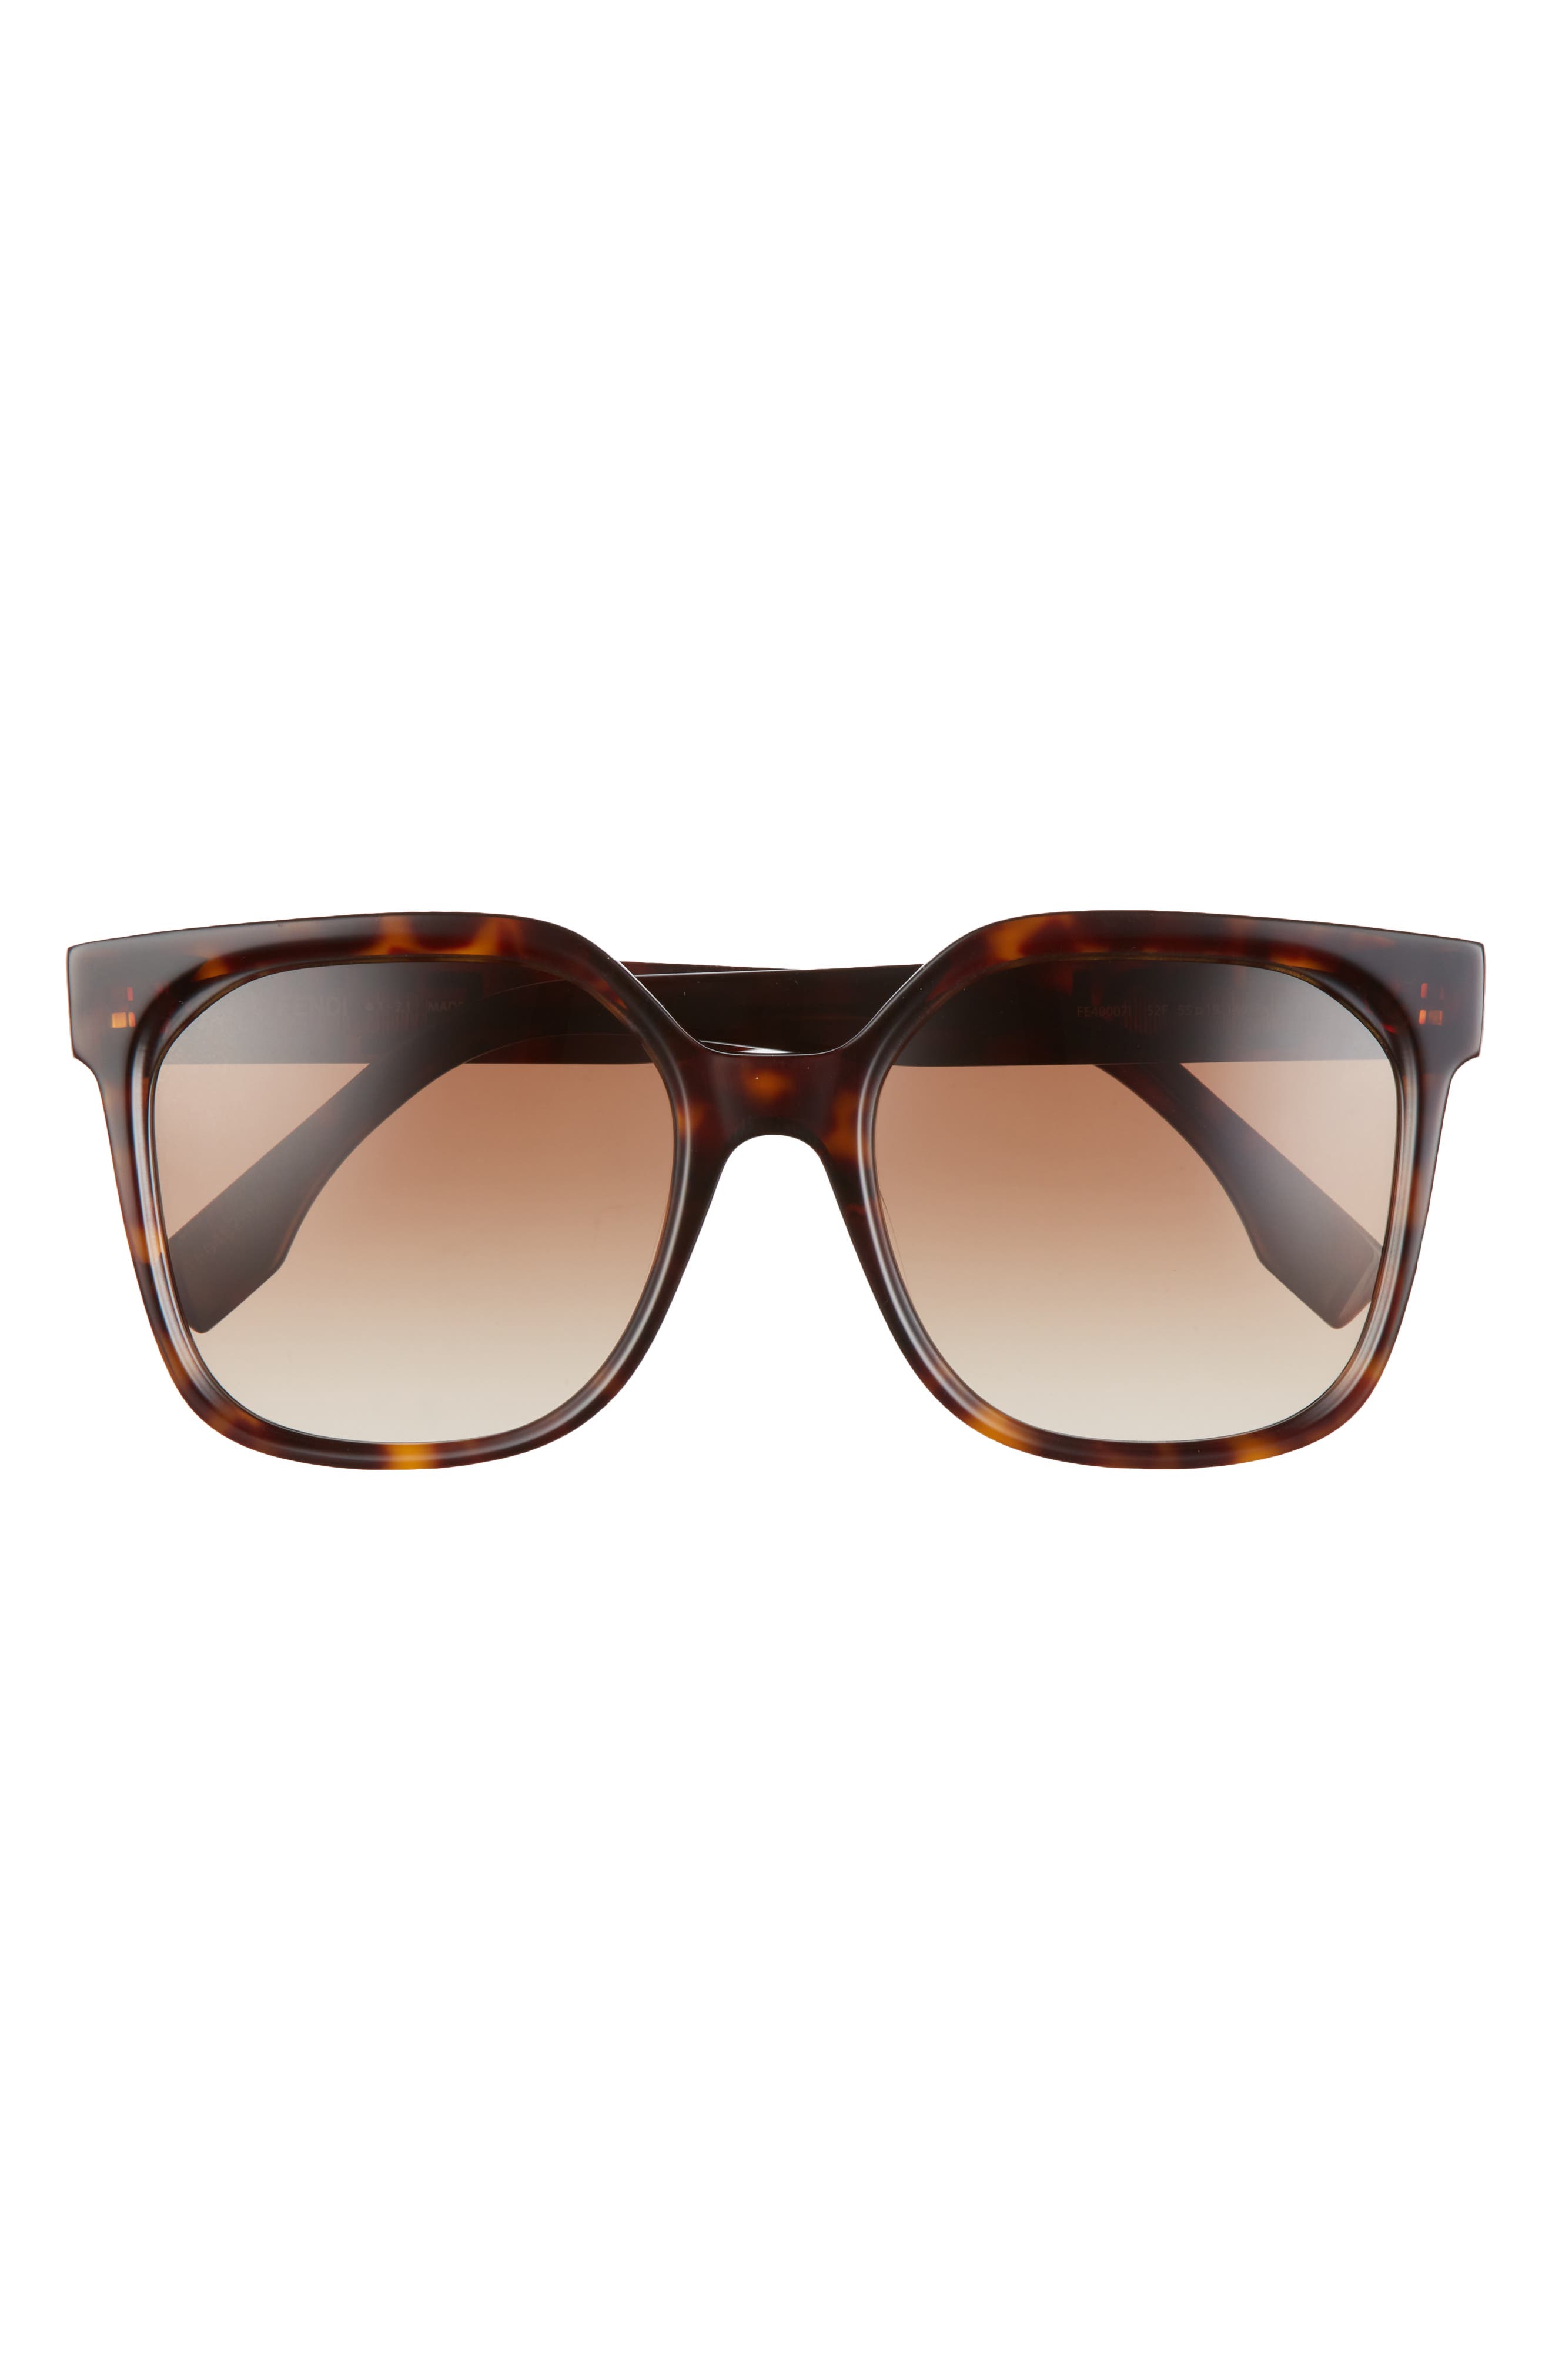 Fendi 55mm Square Sunglasses in Dark Havana /Gradient Brown at Nordstrom